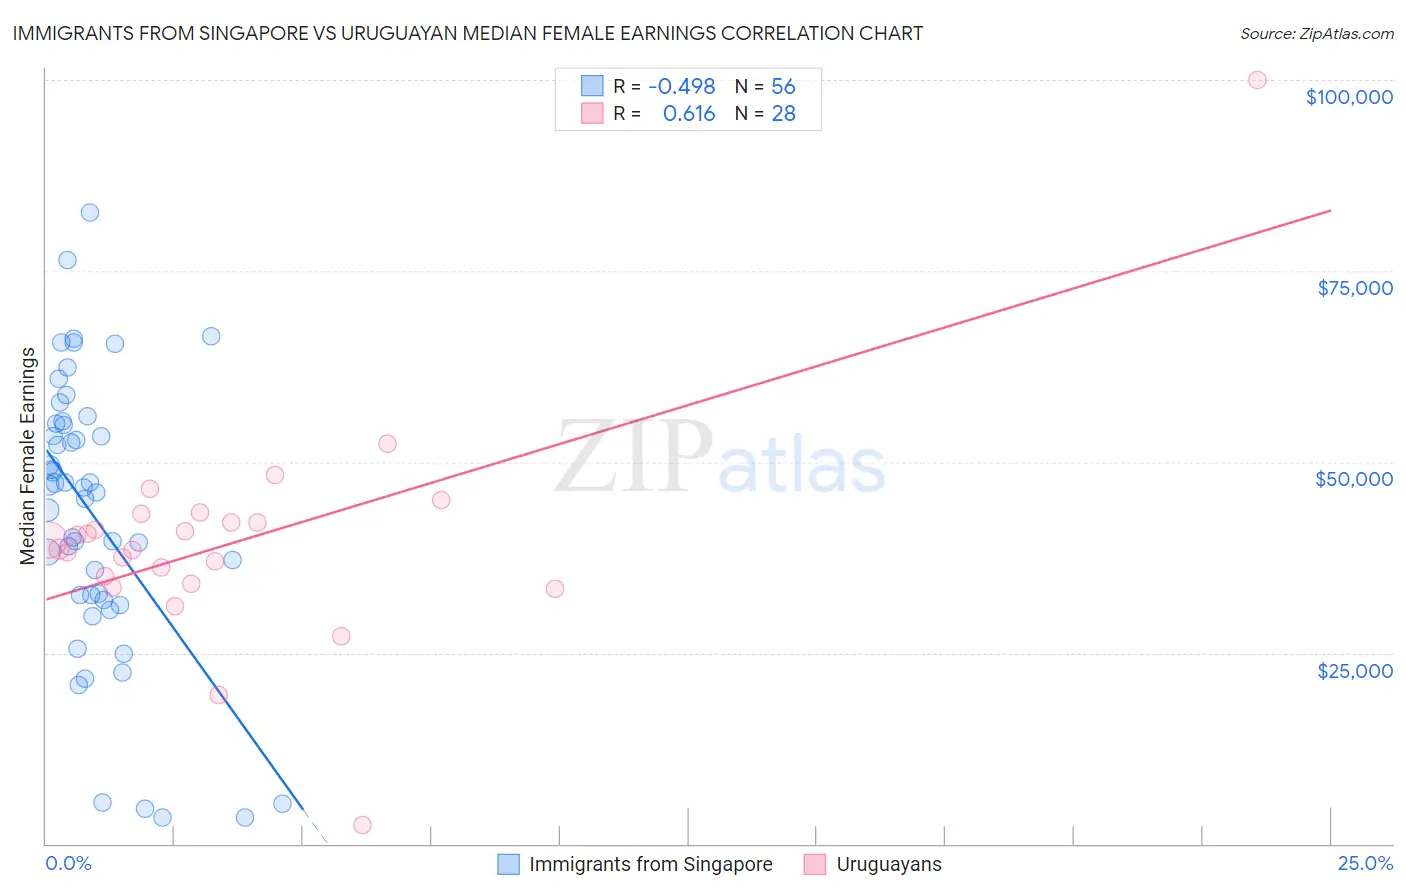 Immigrants from Singapore vs Uruguayan Median Female Earnings